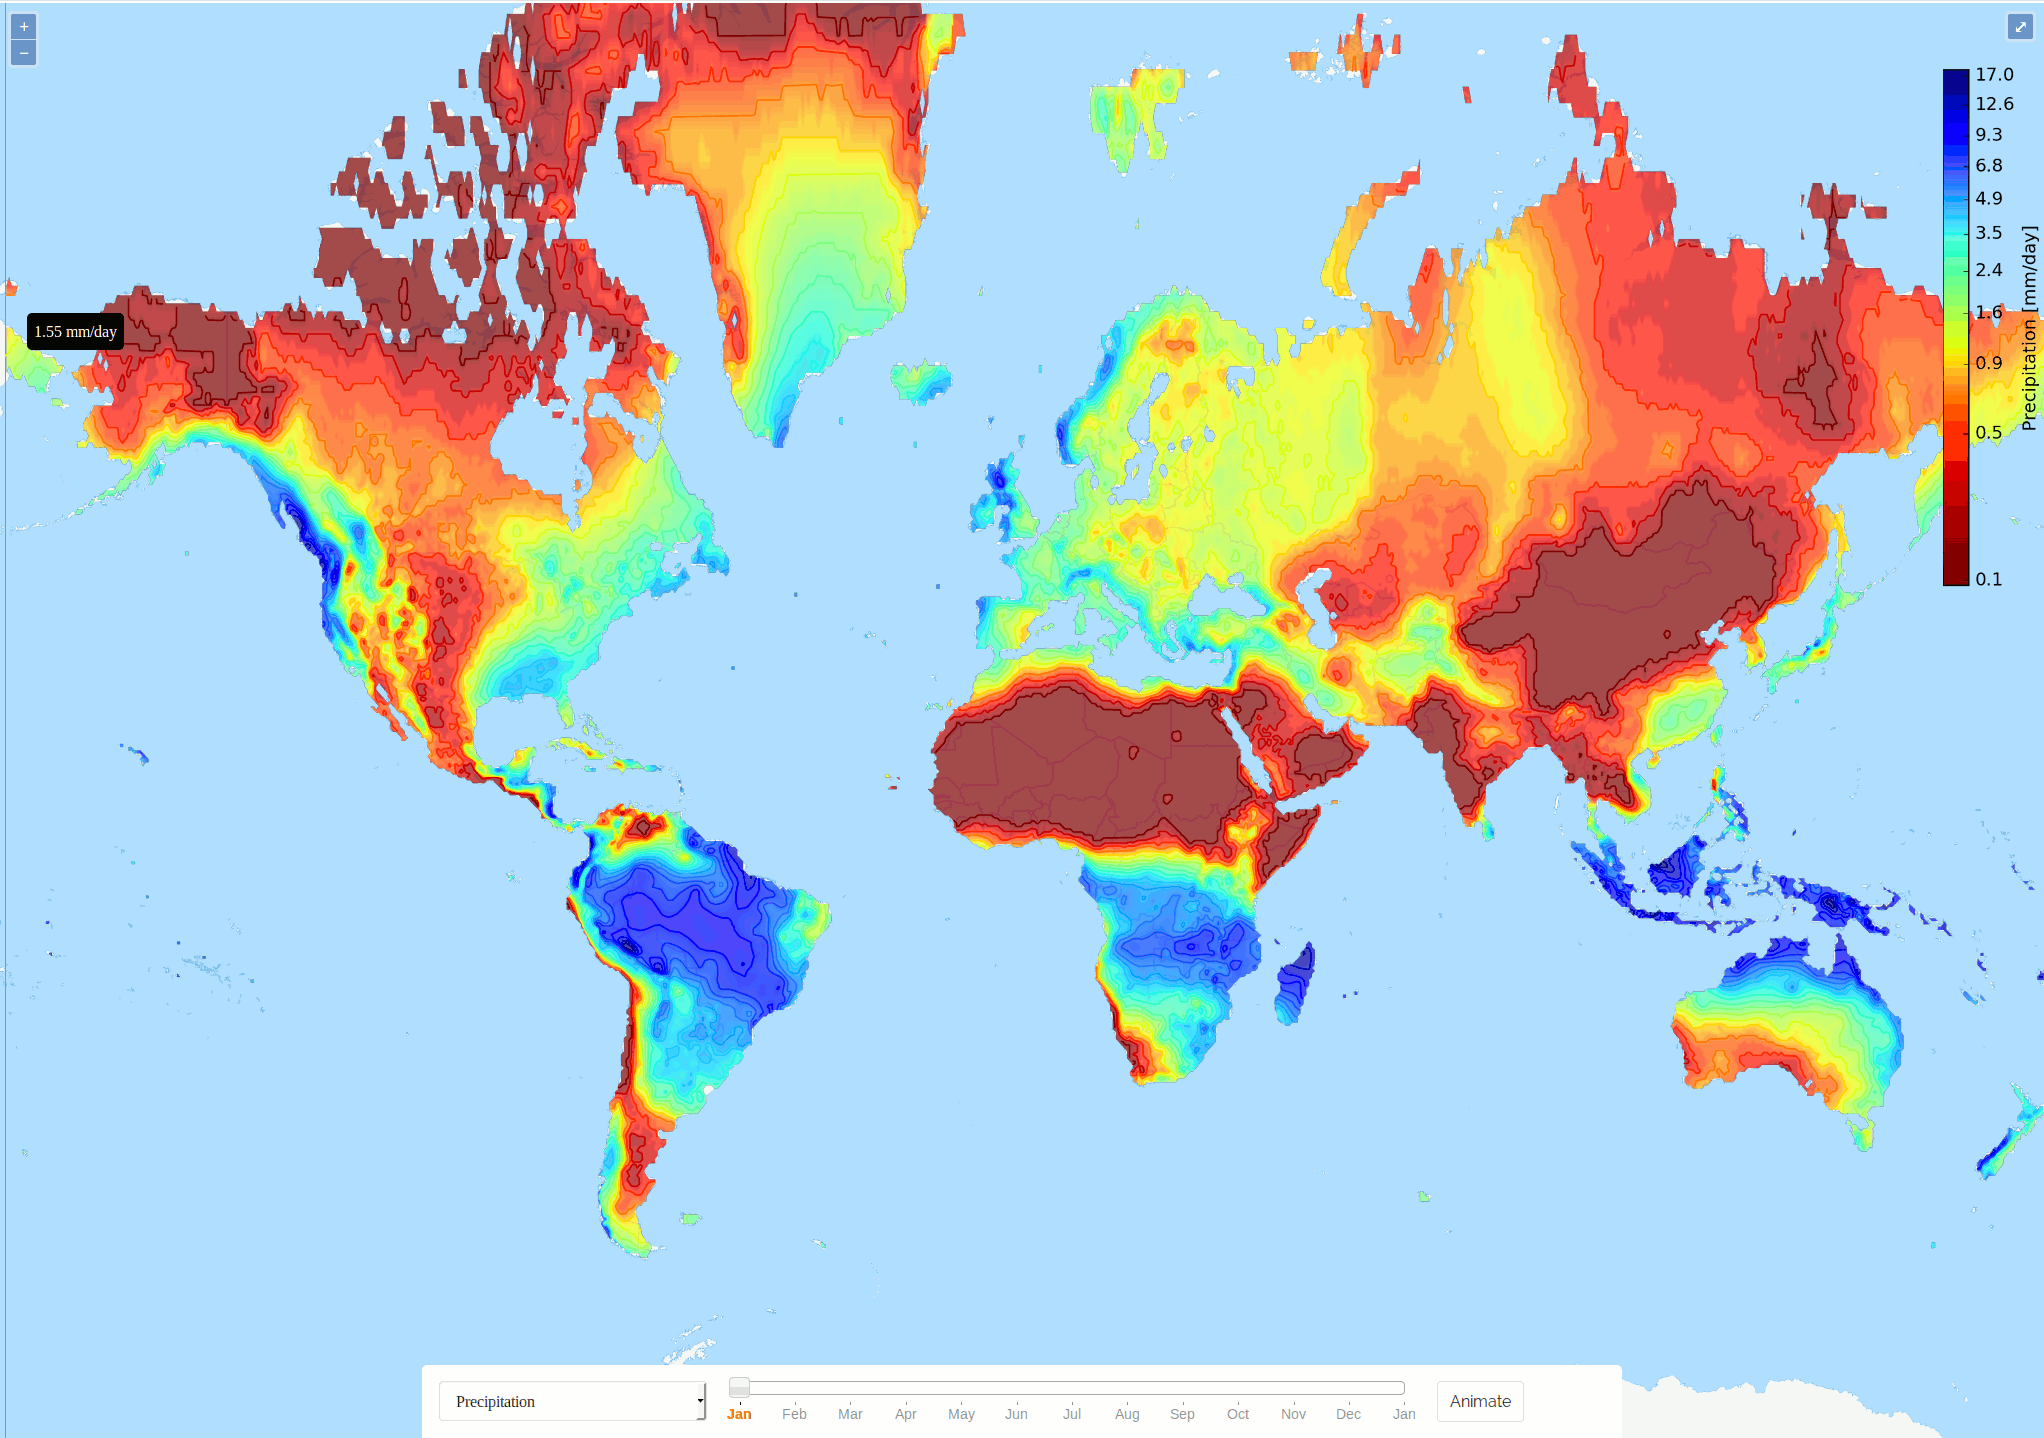 Maps animation